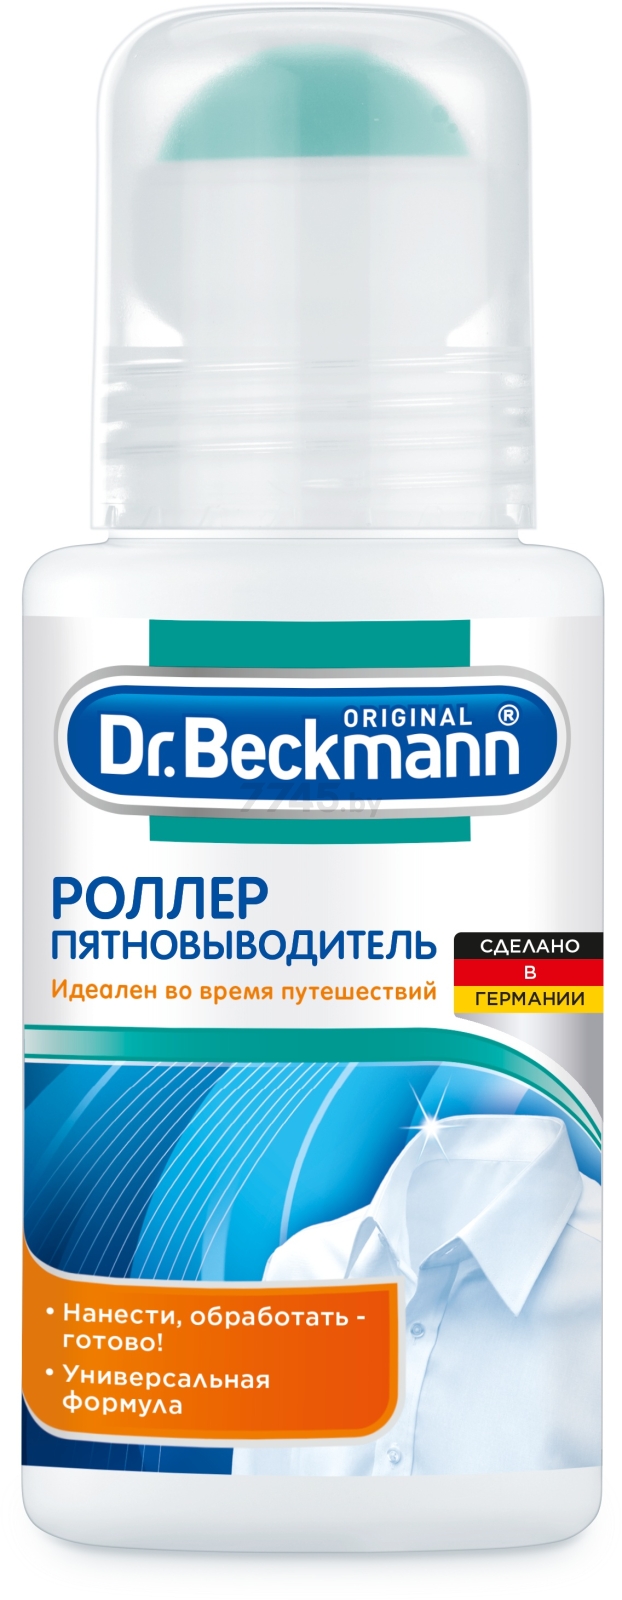 Пятновыводитель DR.BECKMANN 75 мл (5010287377035)